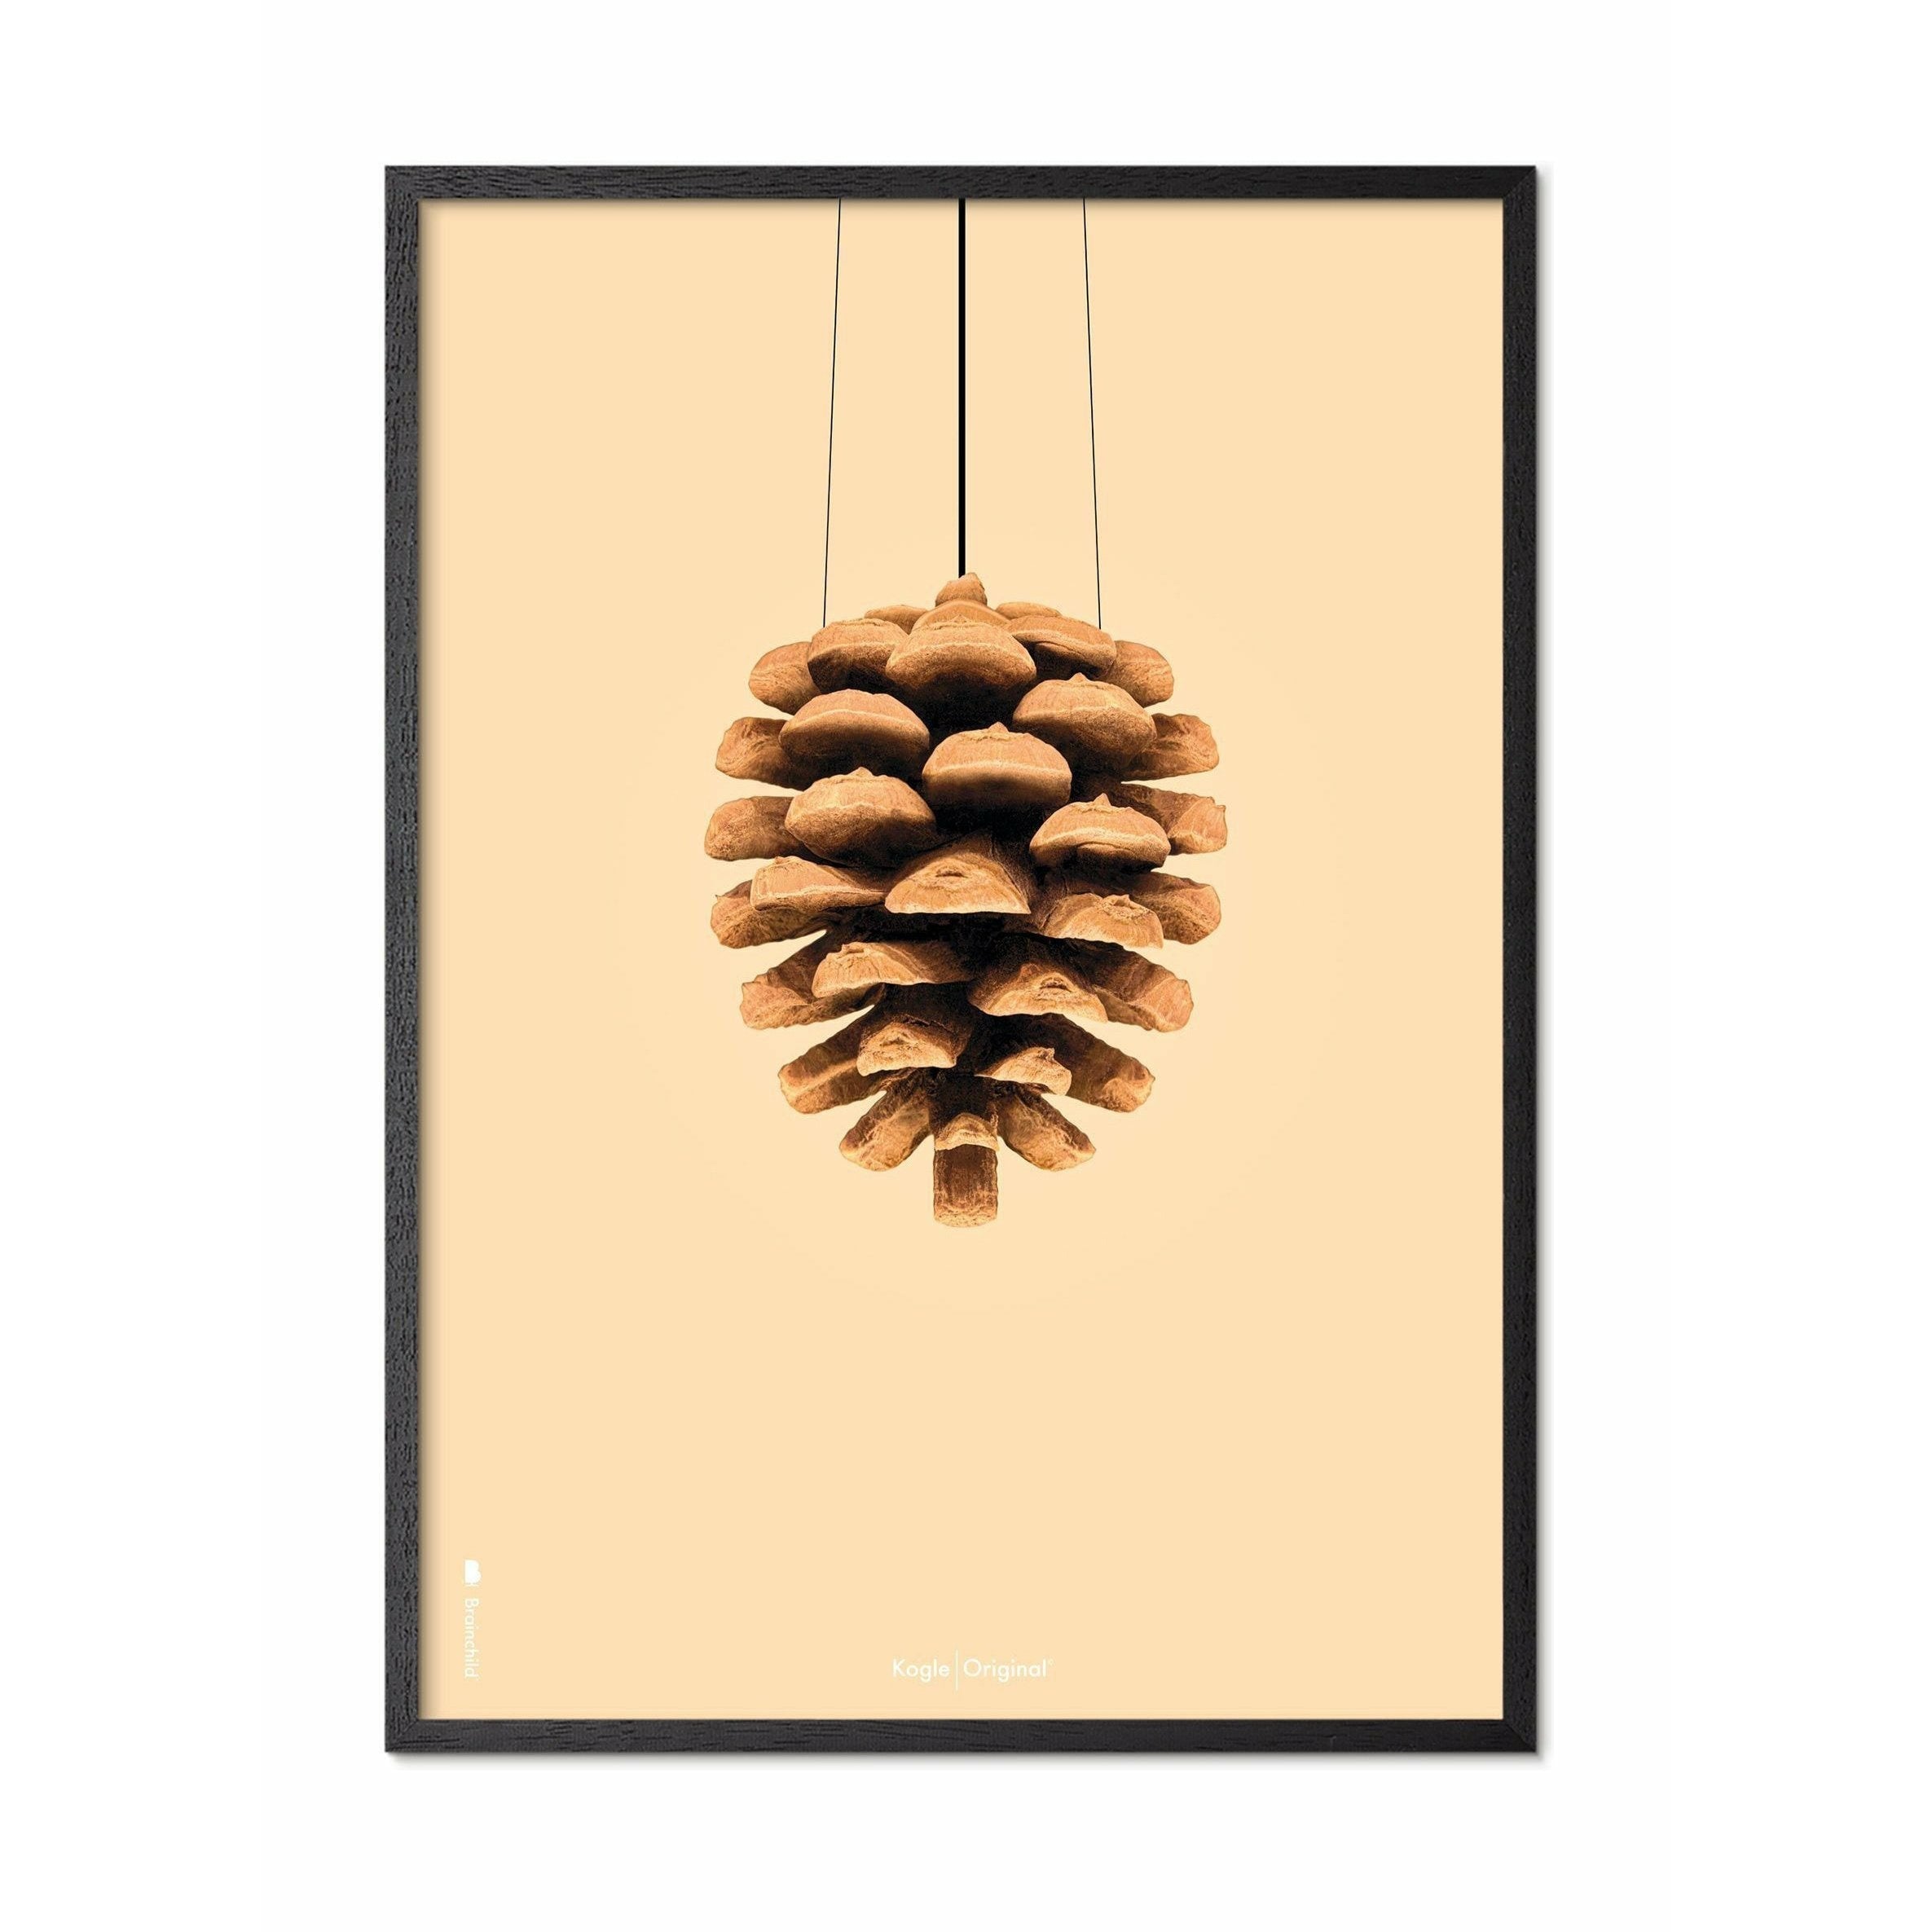 Póster clásico de cono de pino de creación, marco hecho de madera lacada negra de 30x40 cm, fondo de color arena